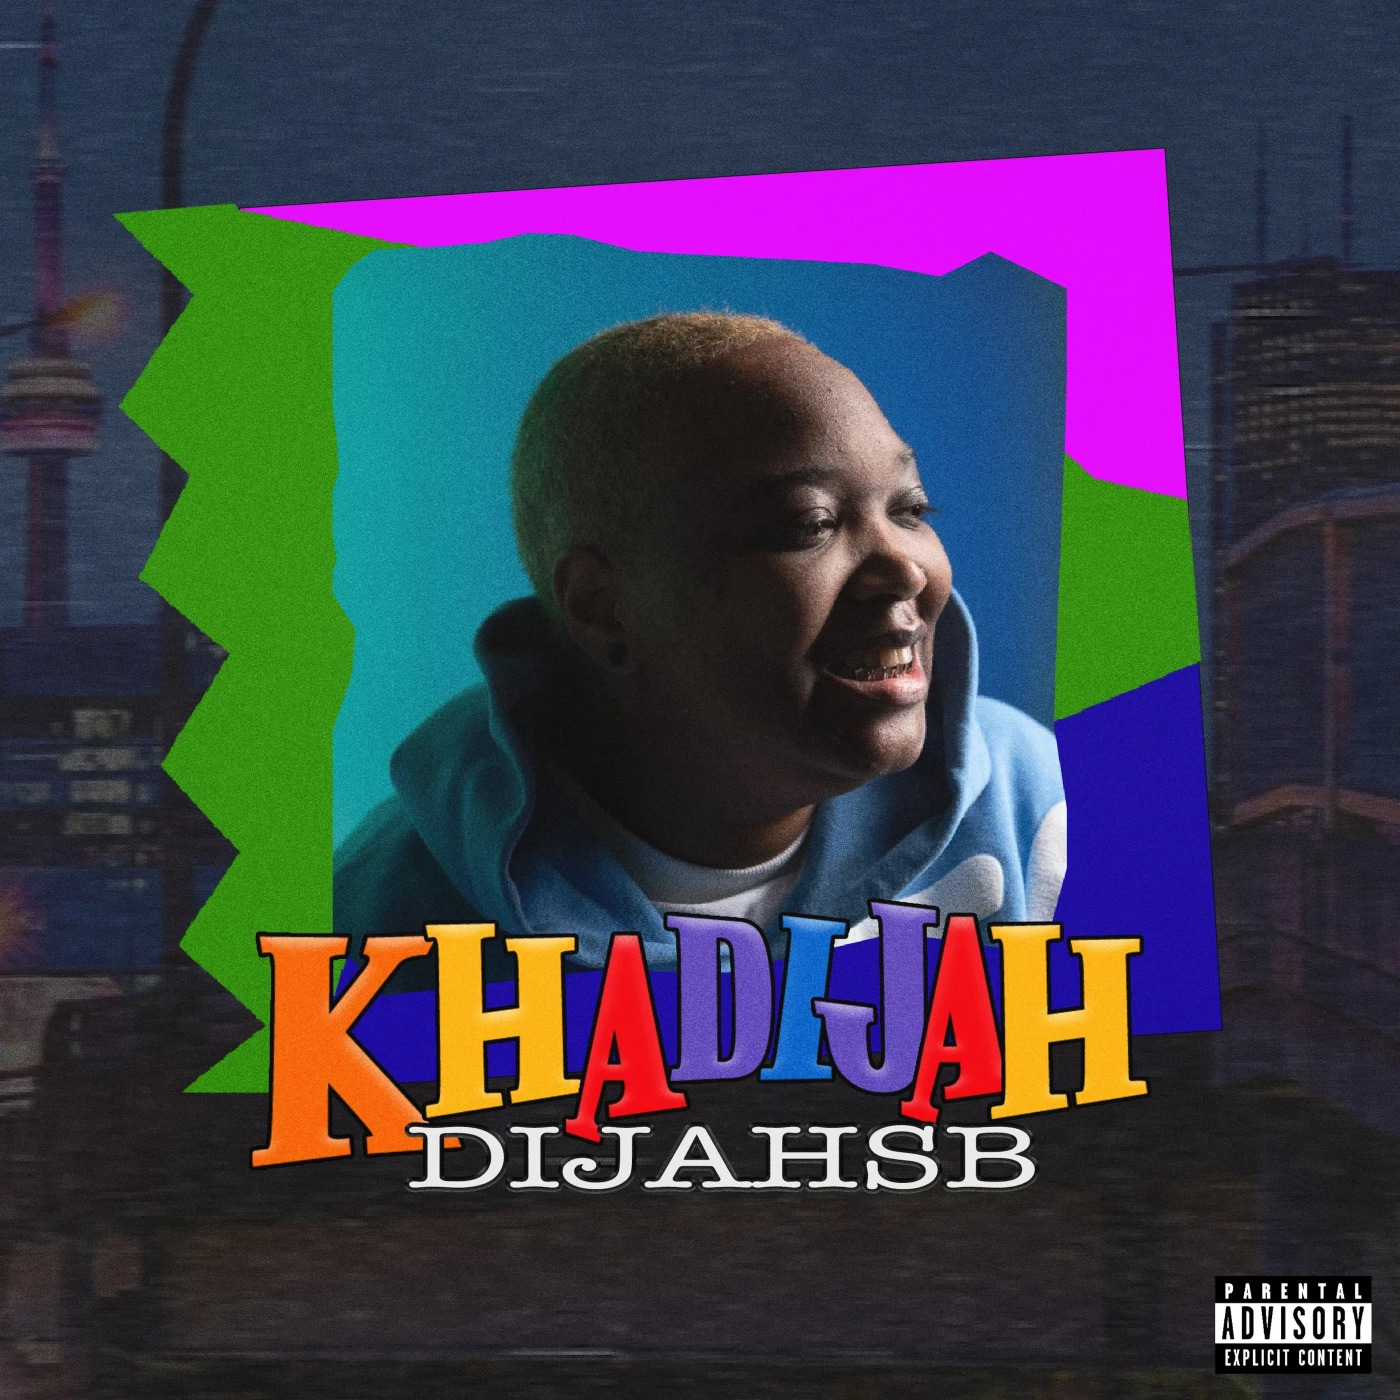 Dijahsb Releases The Single "Khadijah"